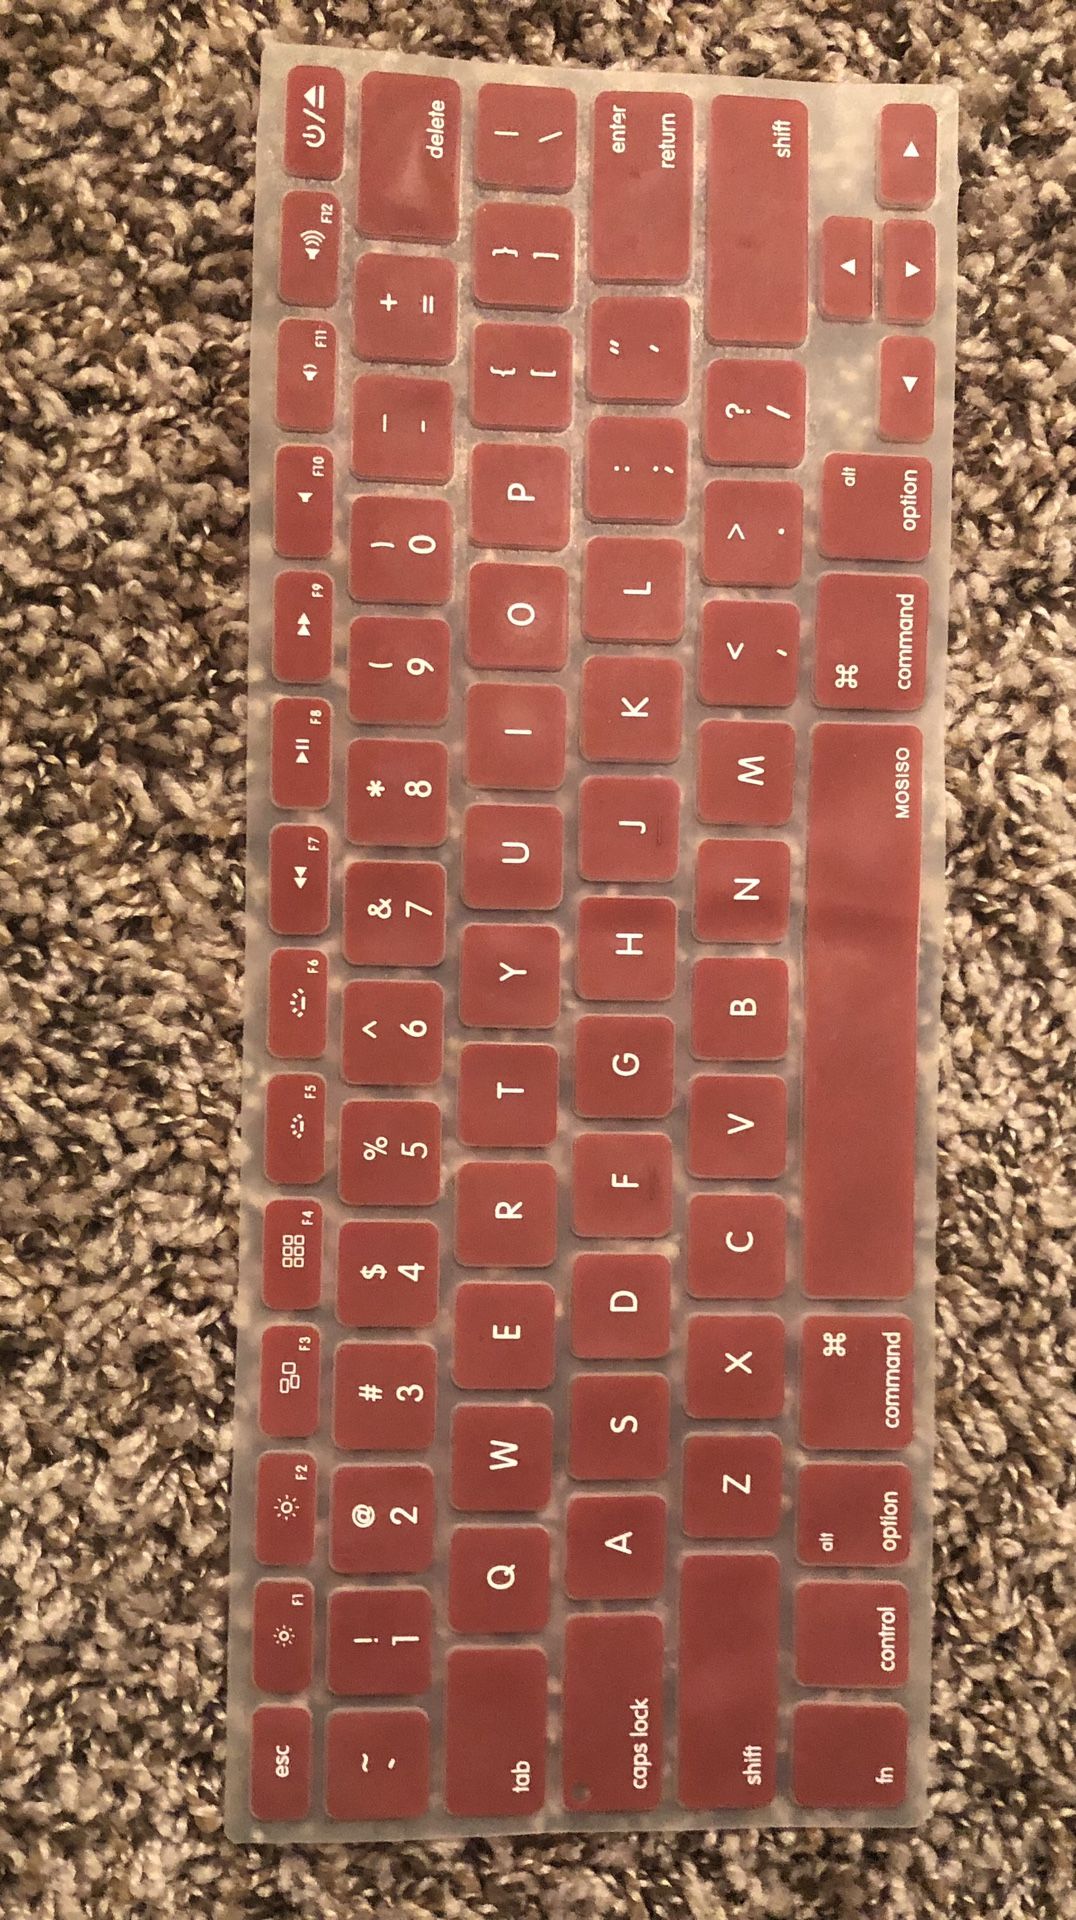 MacBook Keyboard Cover Protector